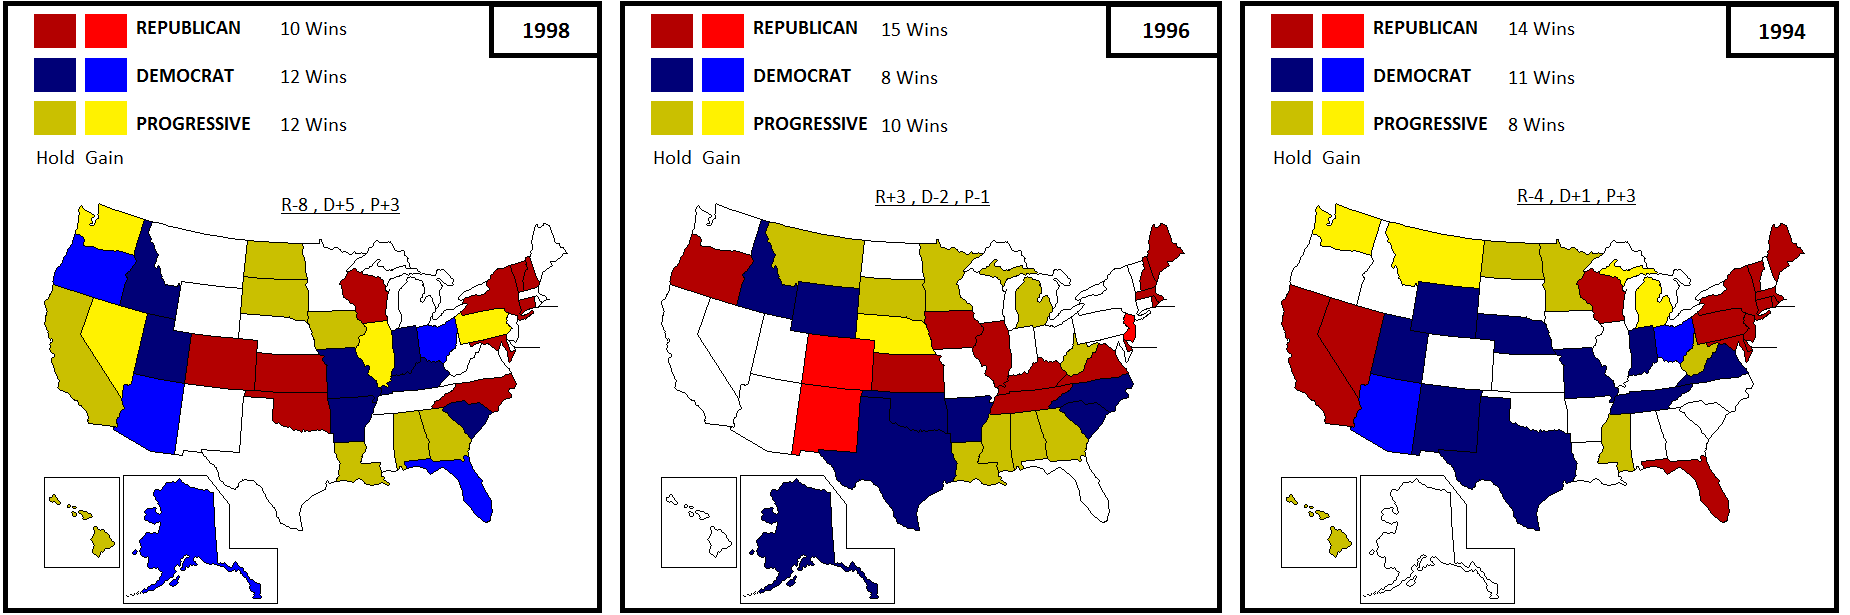 us senate election 1998.png